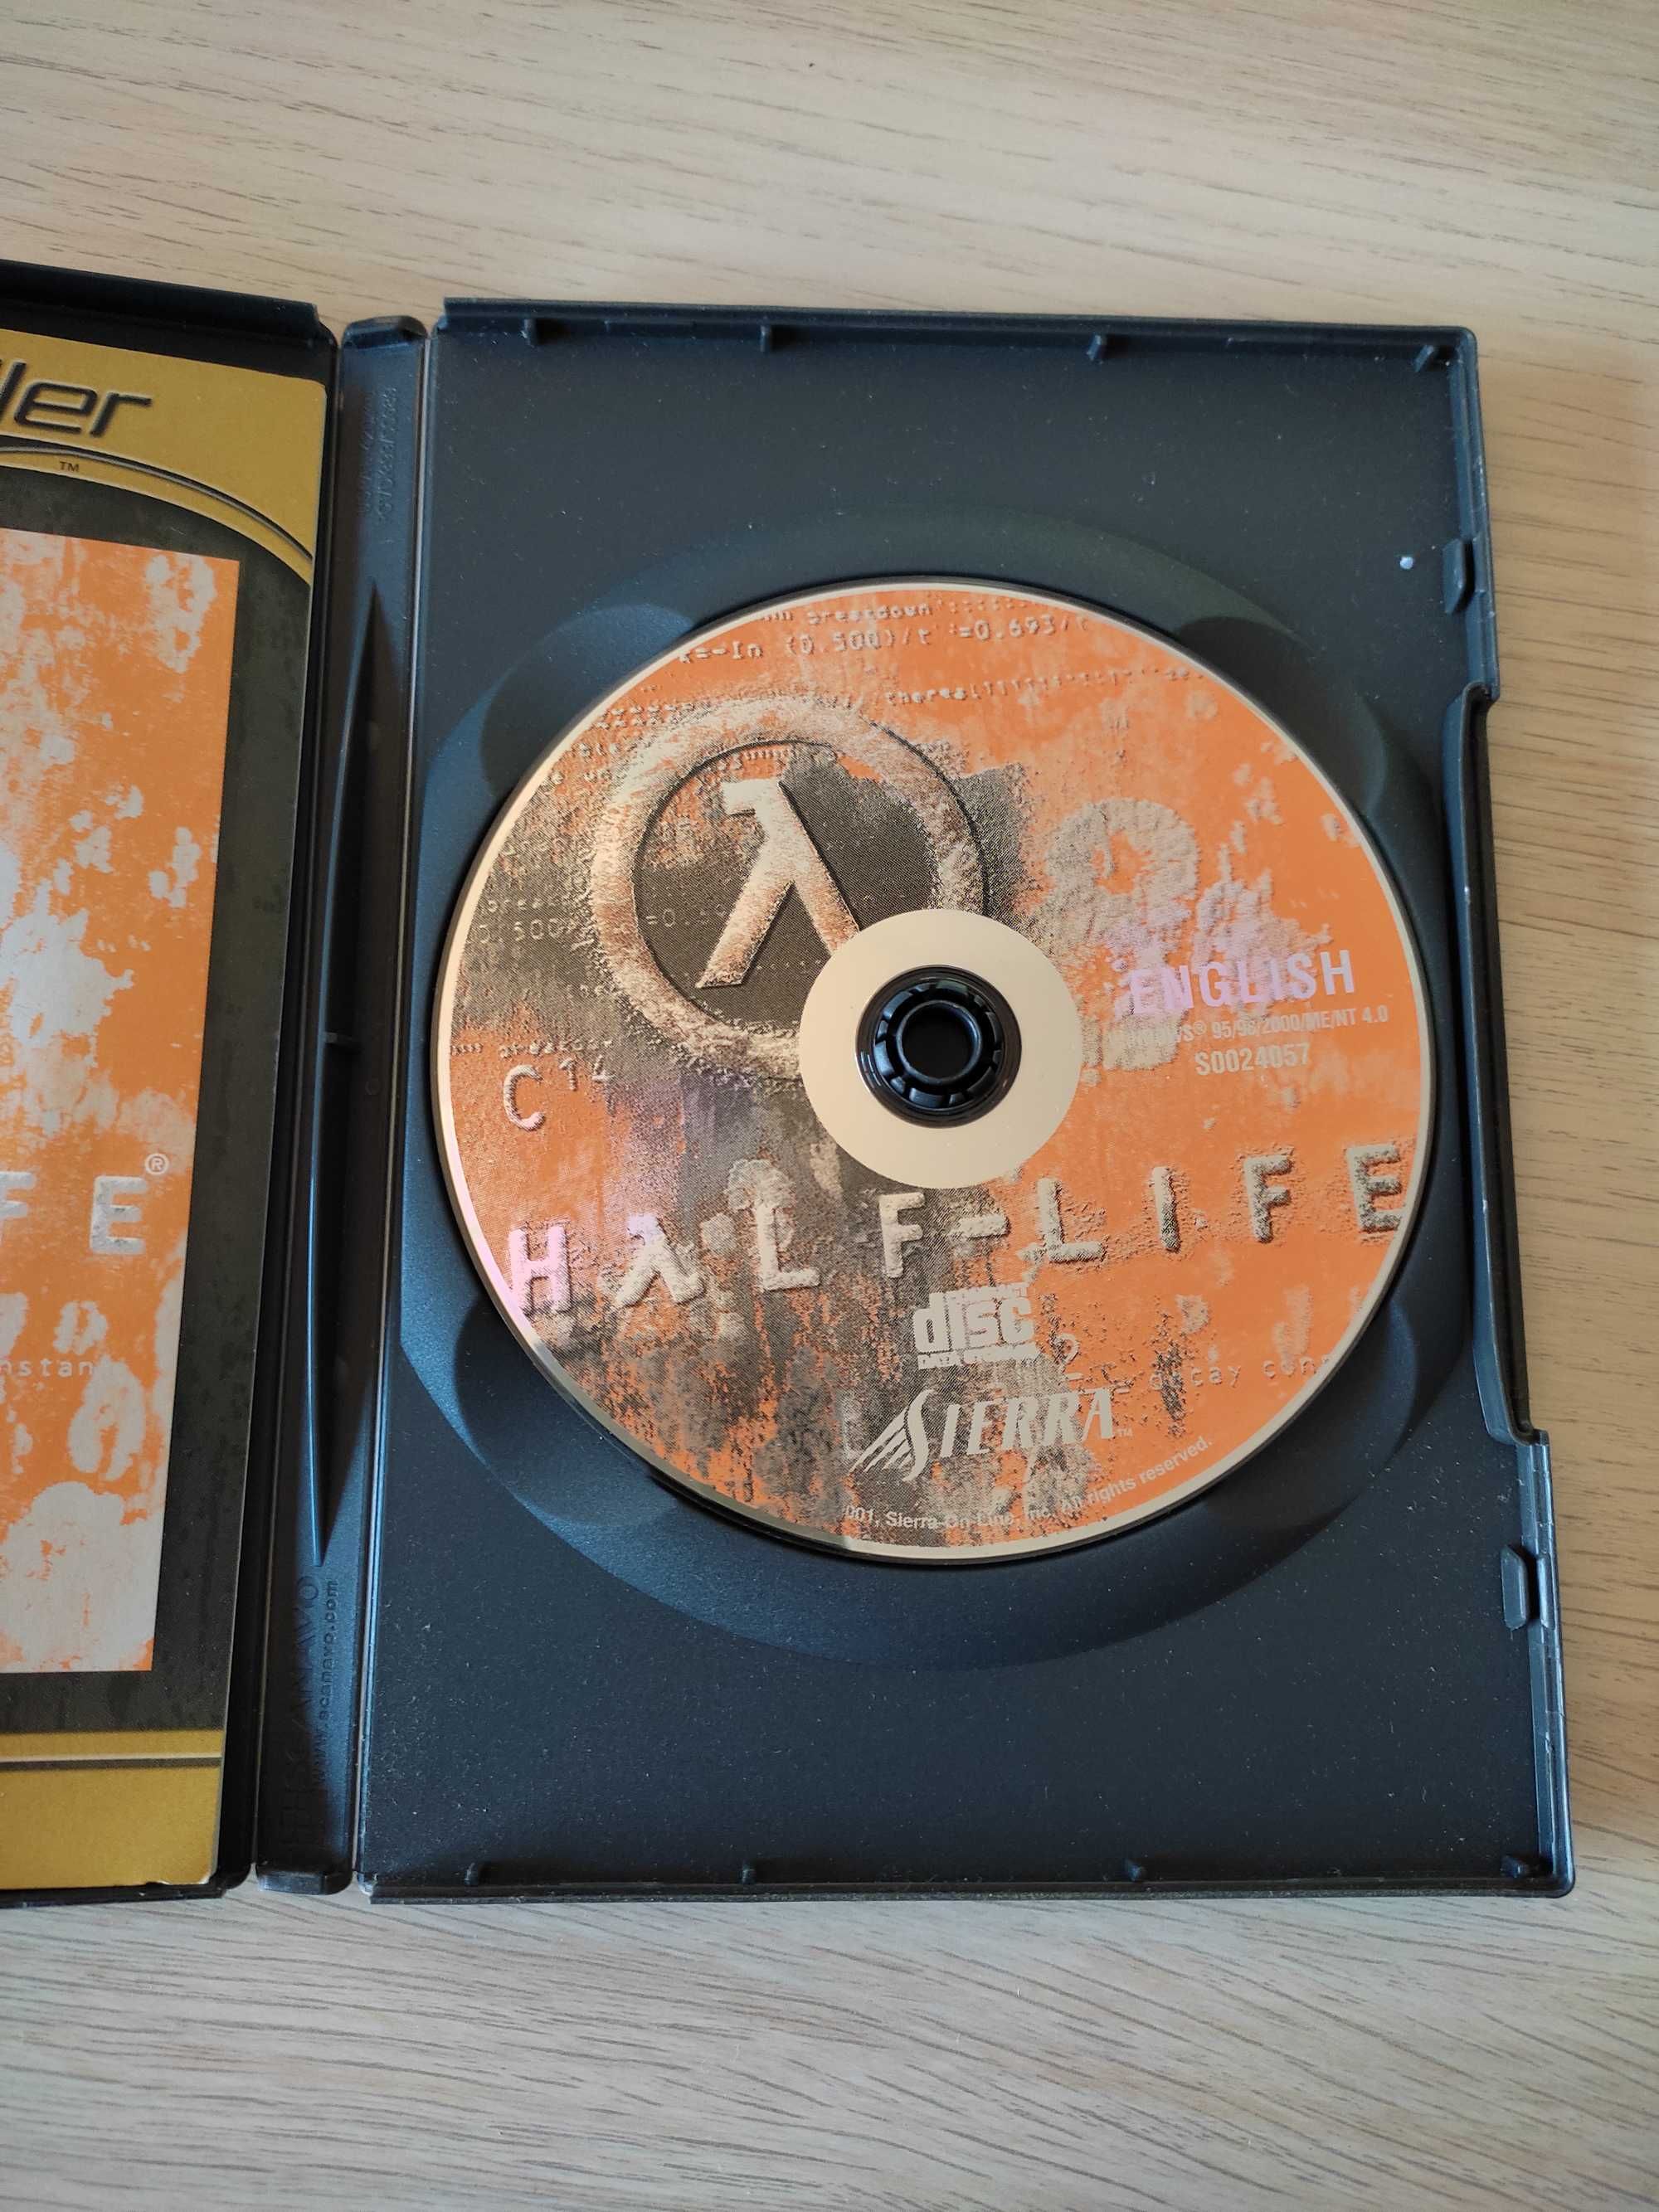 Half-Life (versão PC)